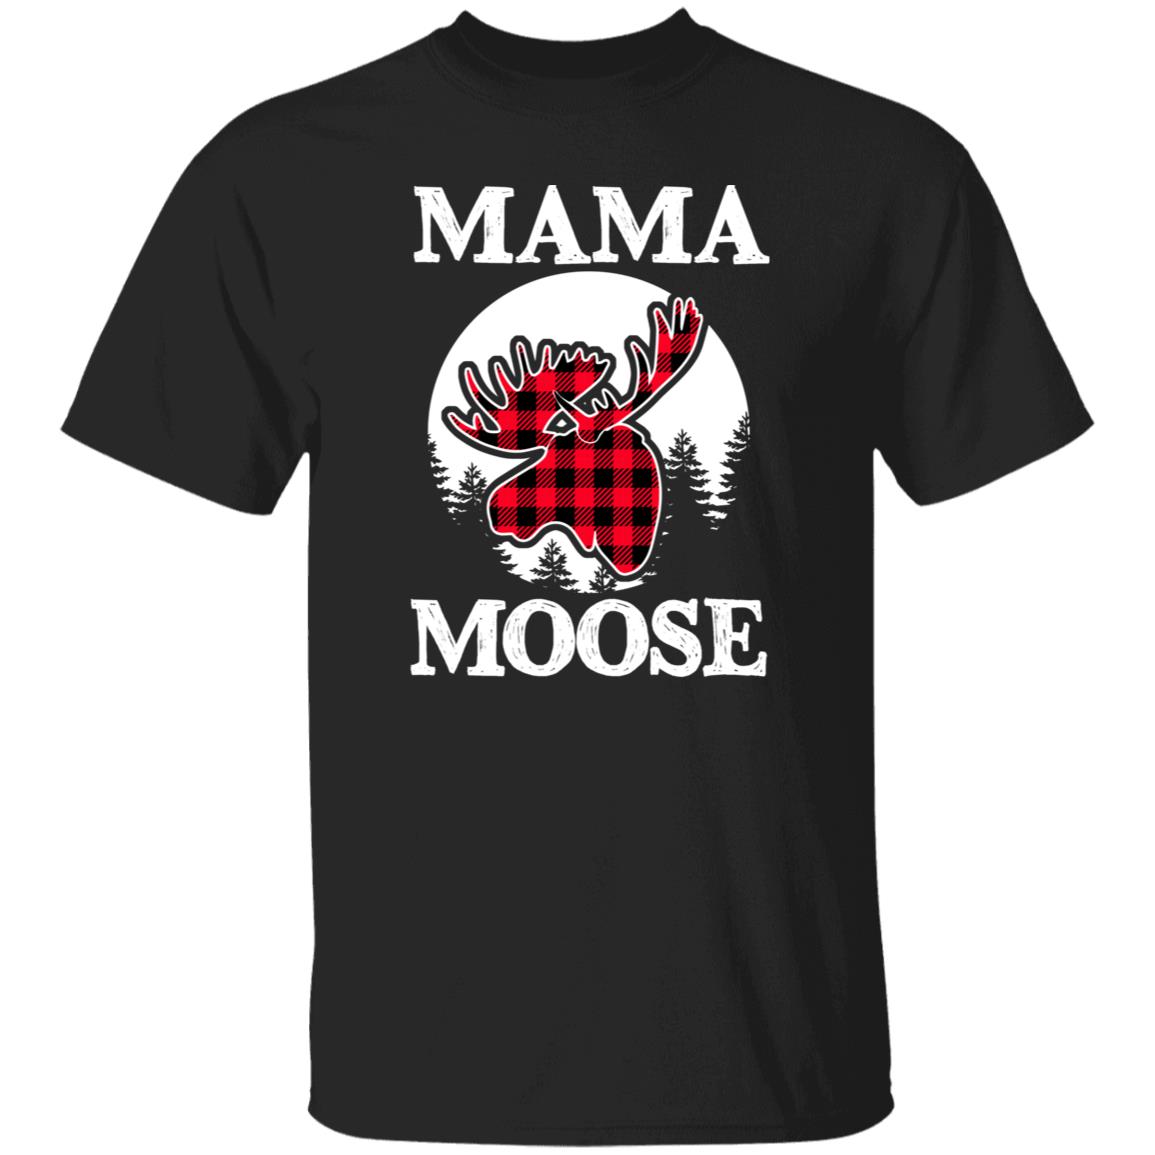 Mama Moose Christmas Unisex Shirt Mom Holiday tee Black Dark Heather-Family-Gift-Planet